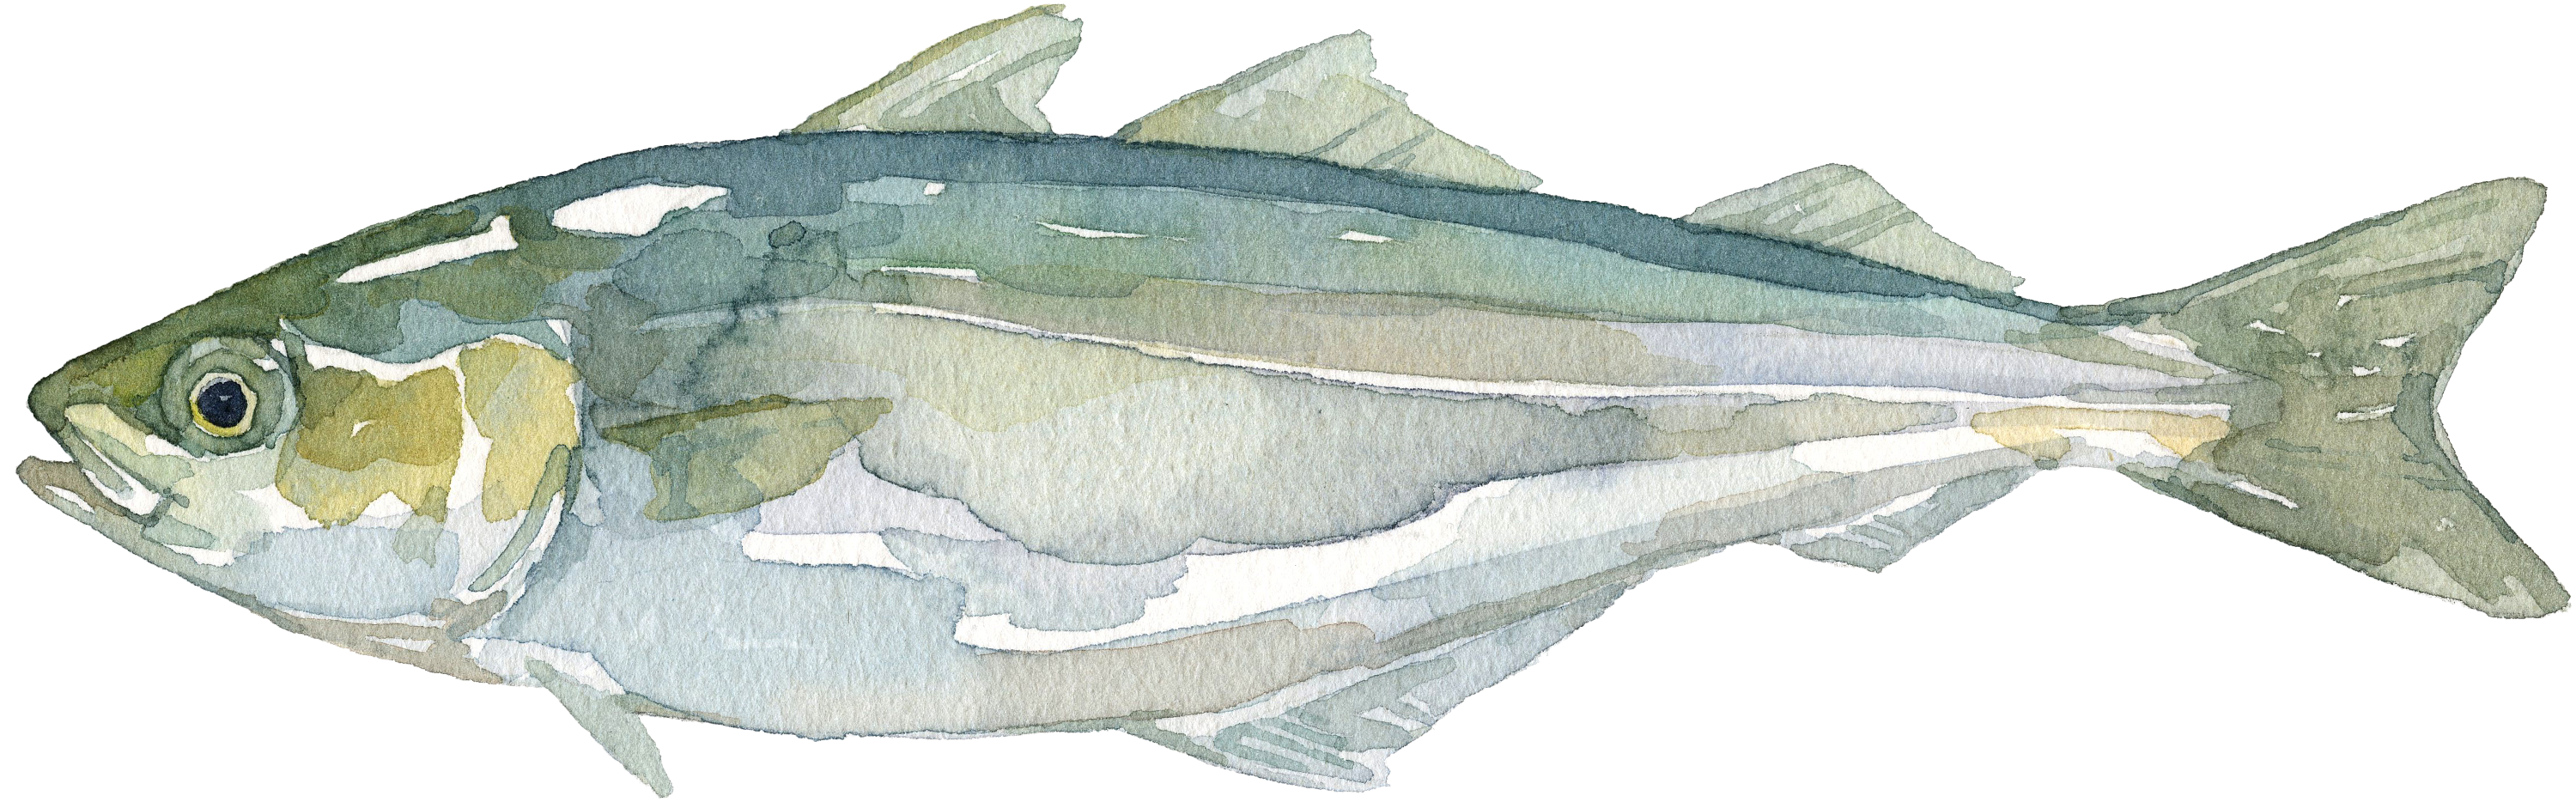 Fischlexikon: Seelachs